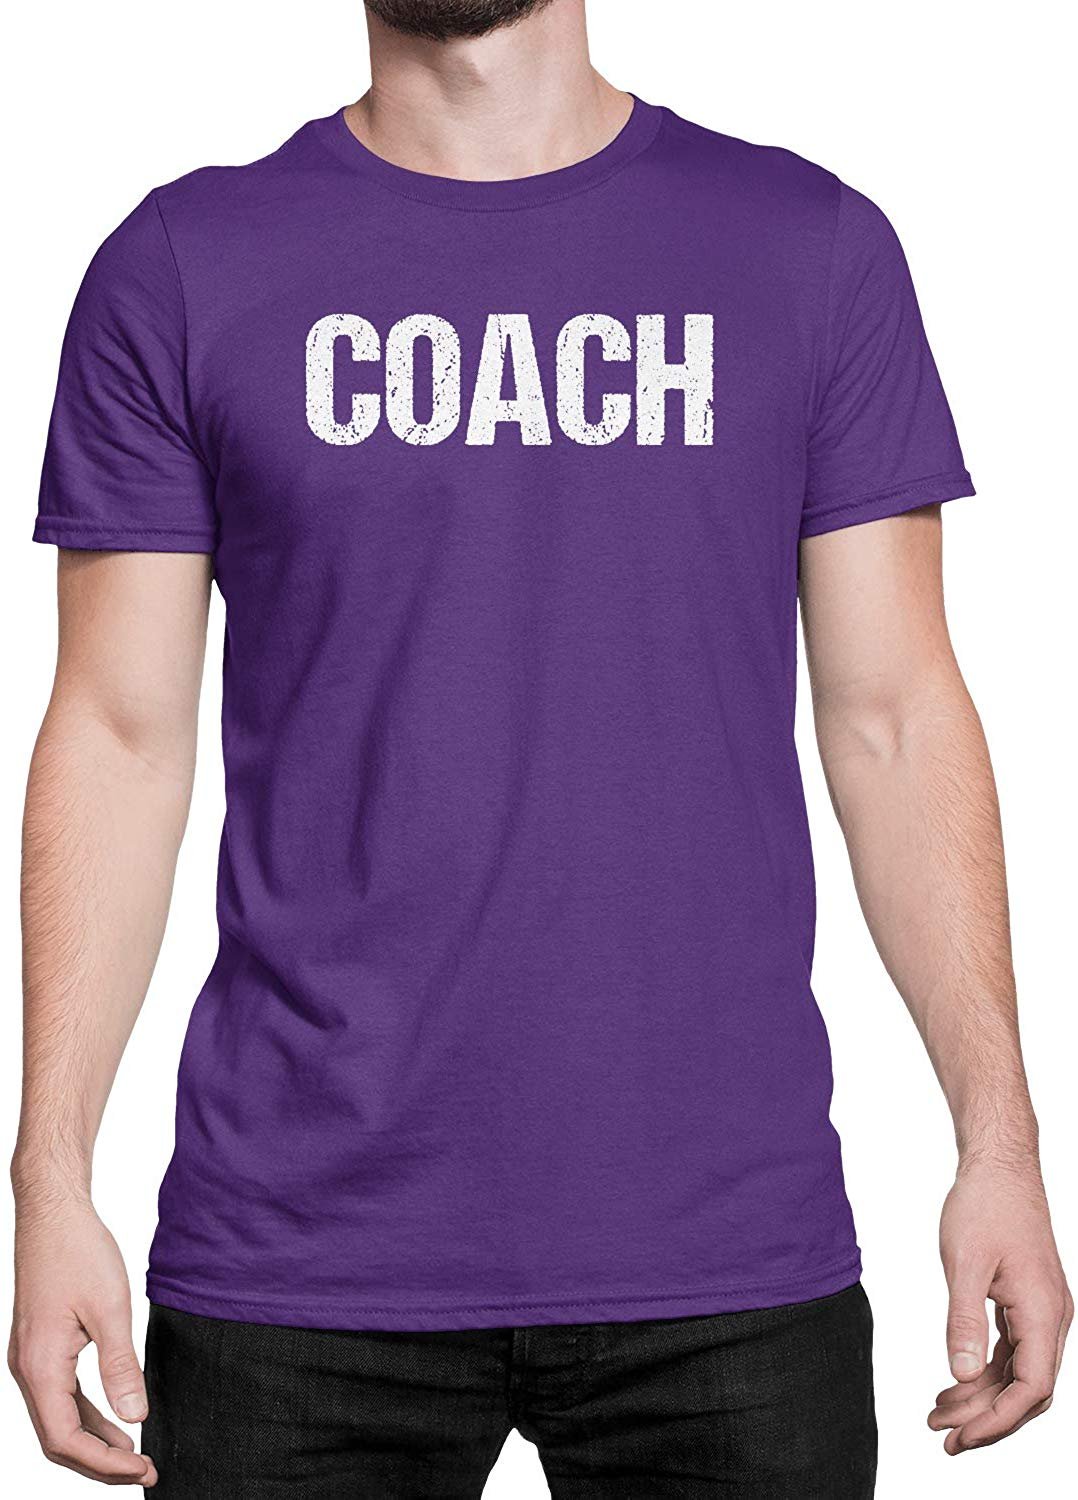 Coach T-Shirt Sports Coaching Tee Shirt (Purple & White, Distressed)